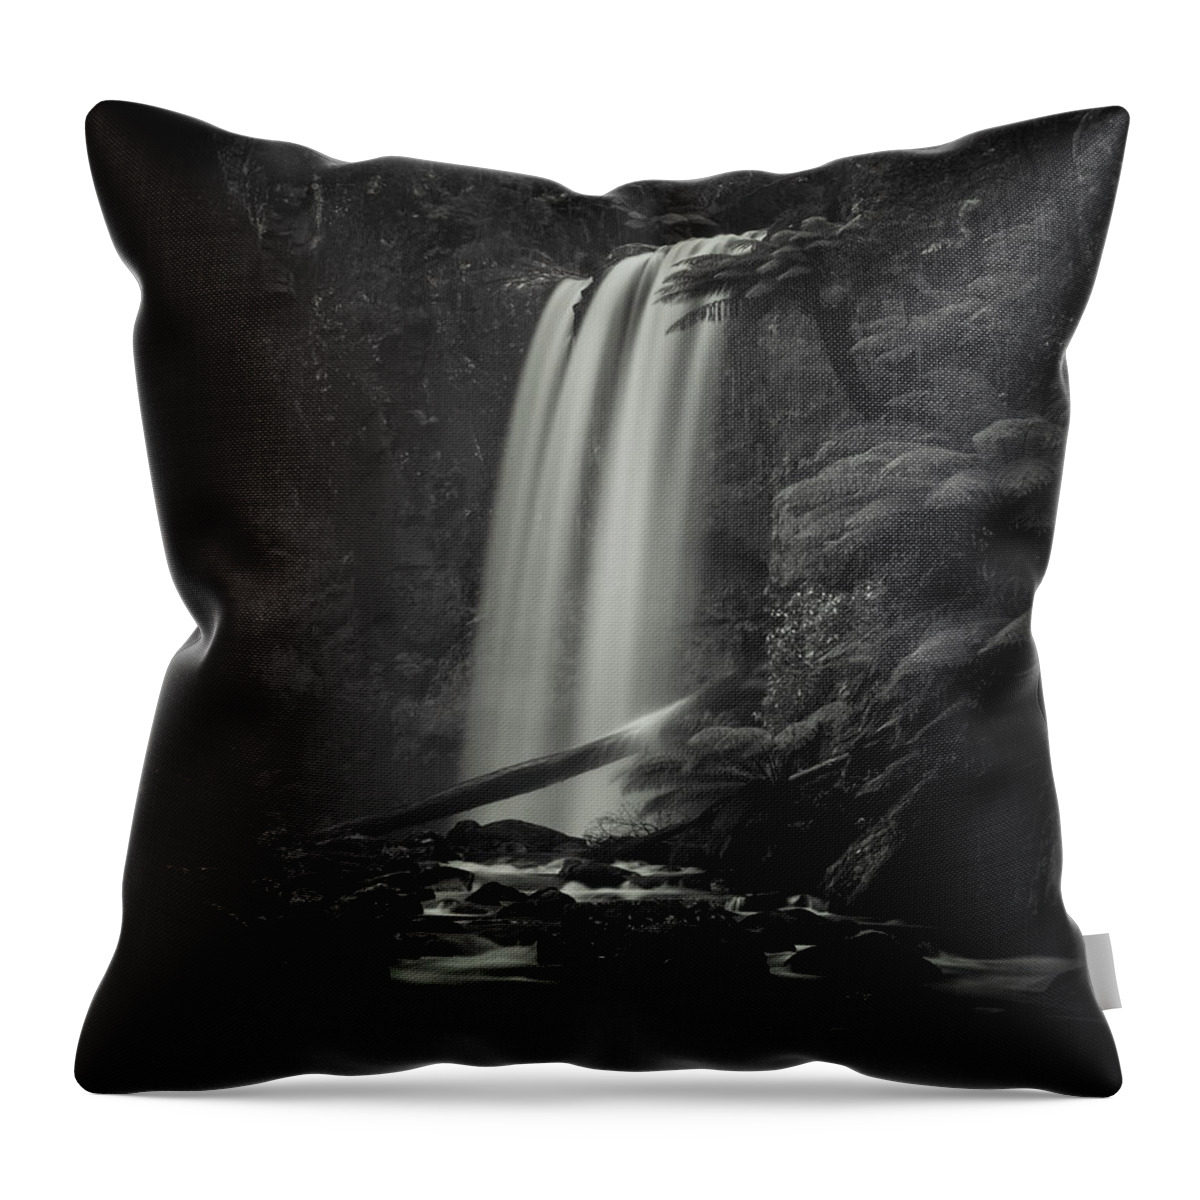 Monochrome Throw Pillow featuring the photograph Hopetoun Falls by Grant Galbraith